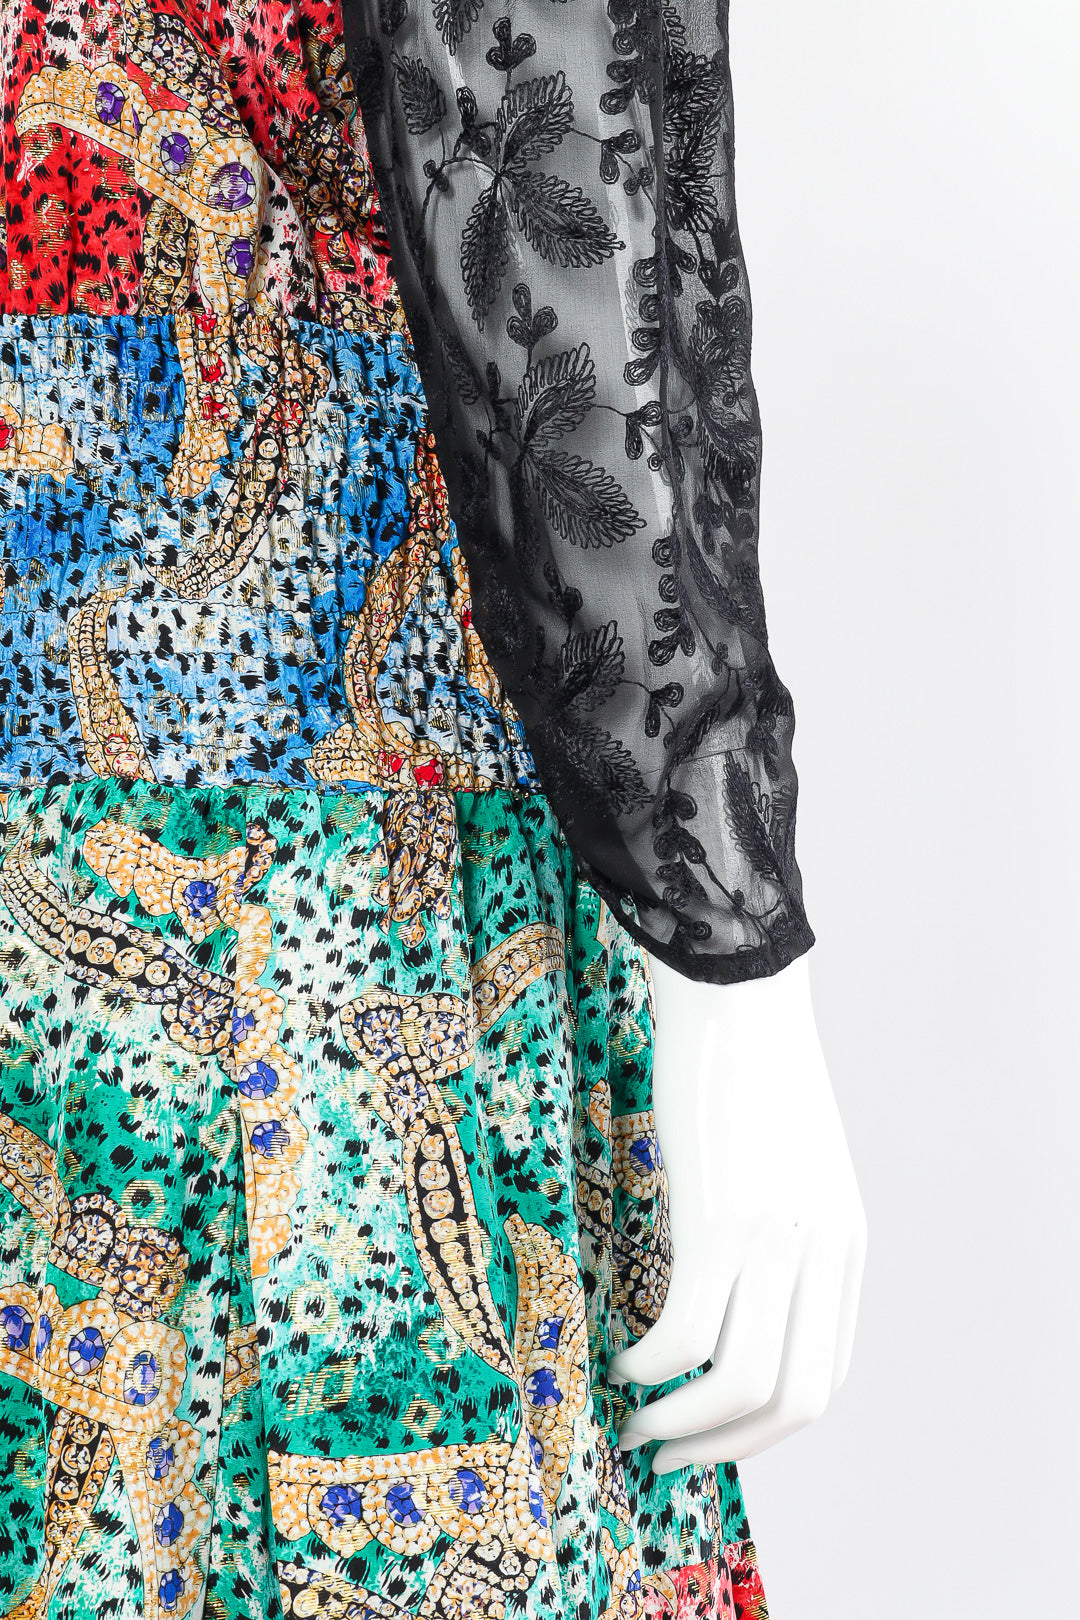 Printed silk dress by Diane Freis mannequin sleeve @recessla